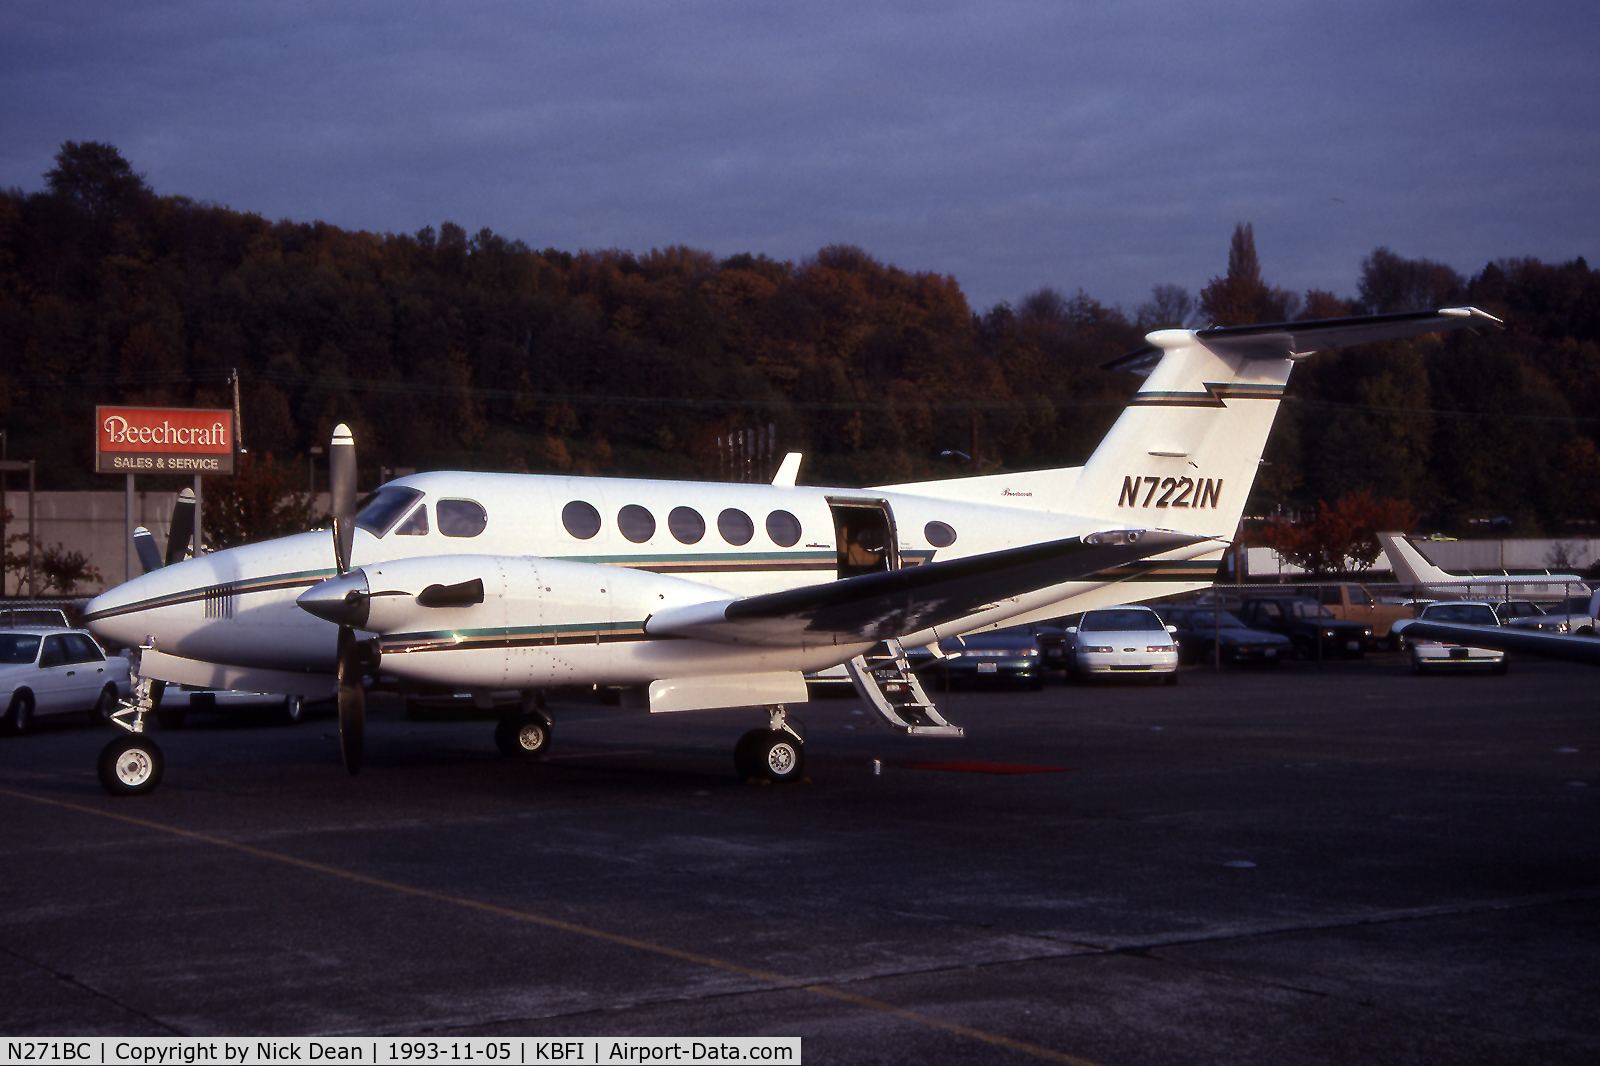 N271BC, 1985 Beech 300 C/N FA-48, KBFI (Currently registered N271BC but seen here 15 years ago as N7221N)